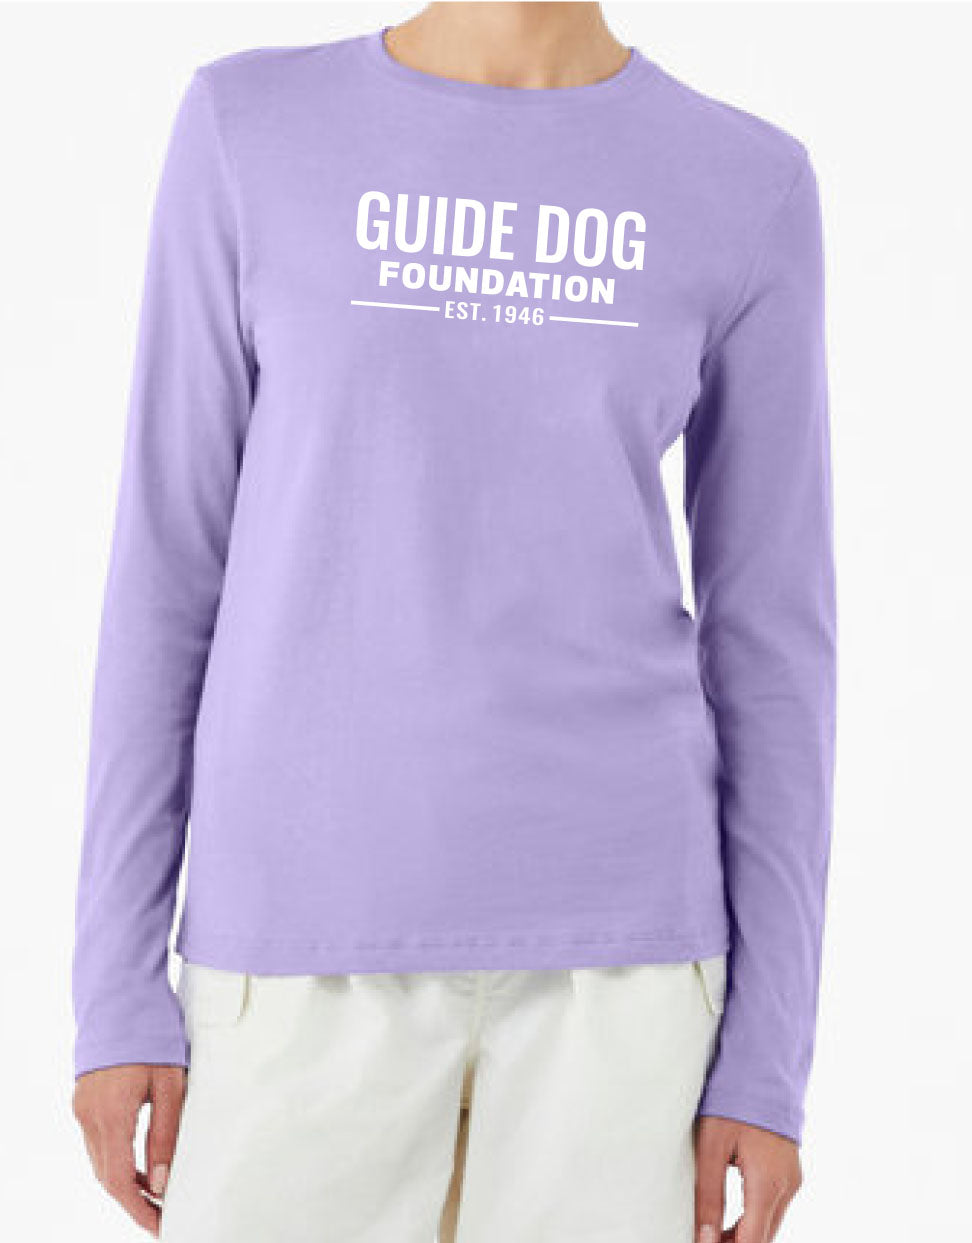 Ladies Guide Dog Foundation Logo Long Sleeve T-Shirt